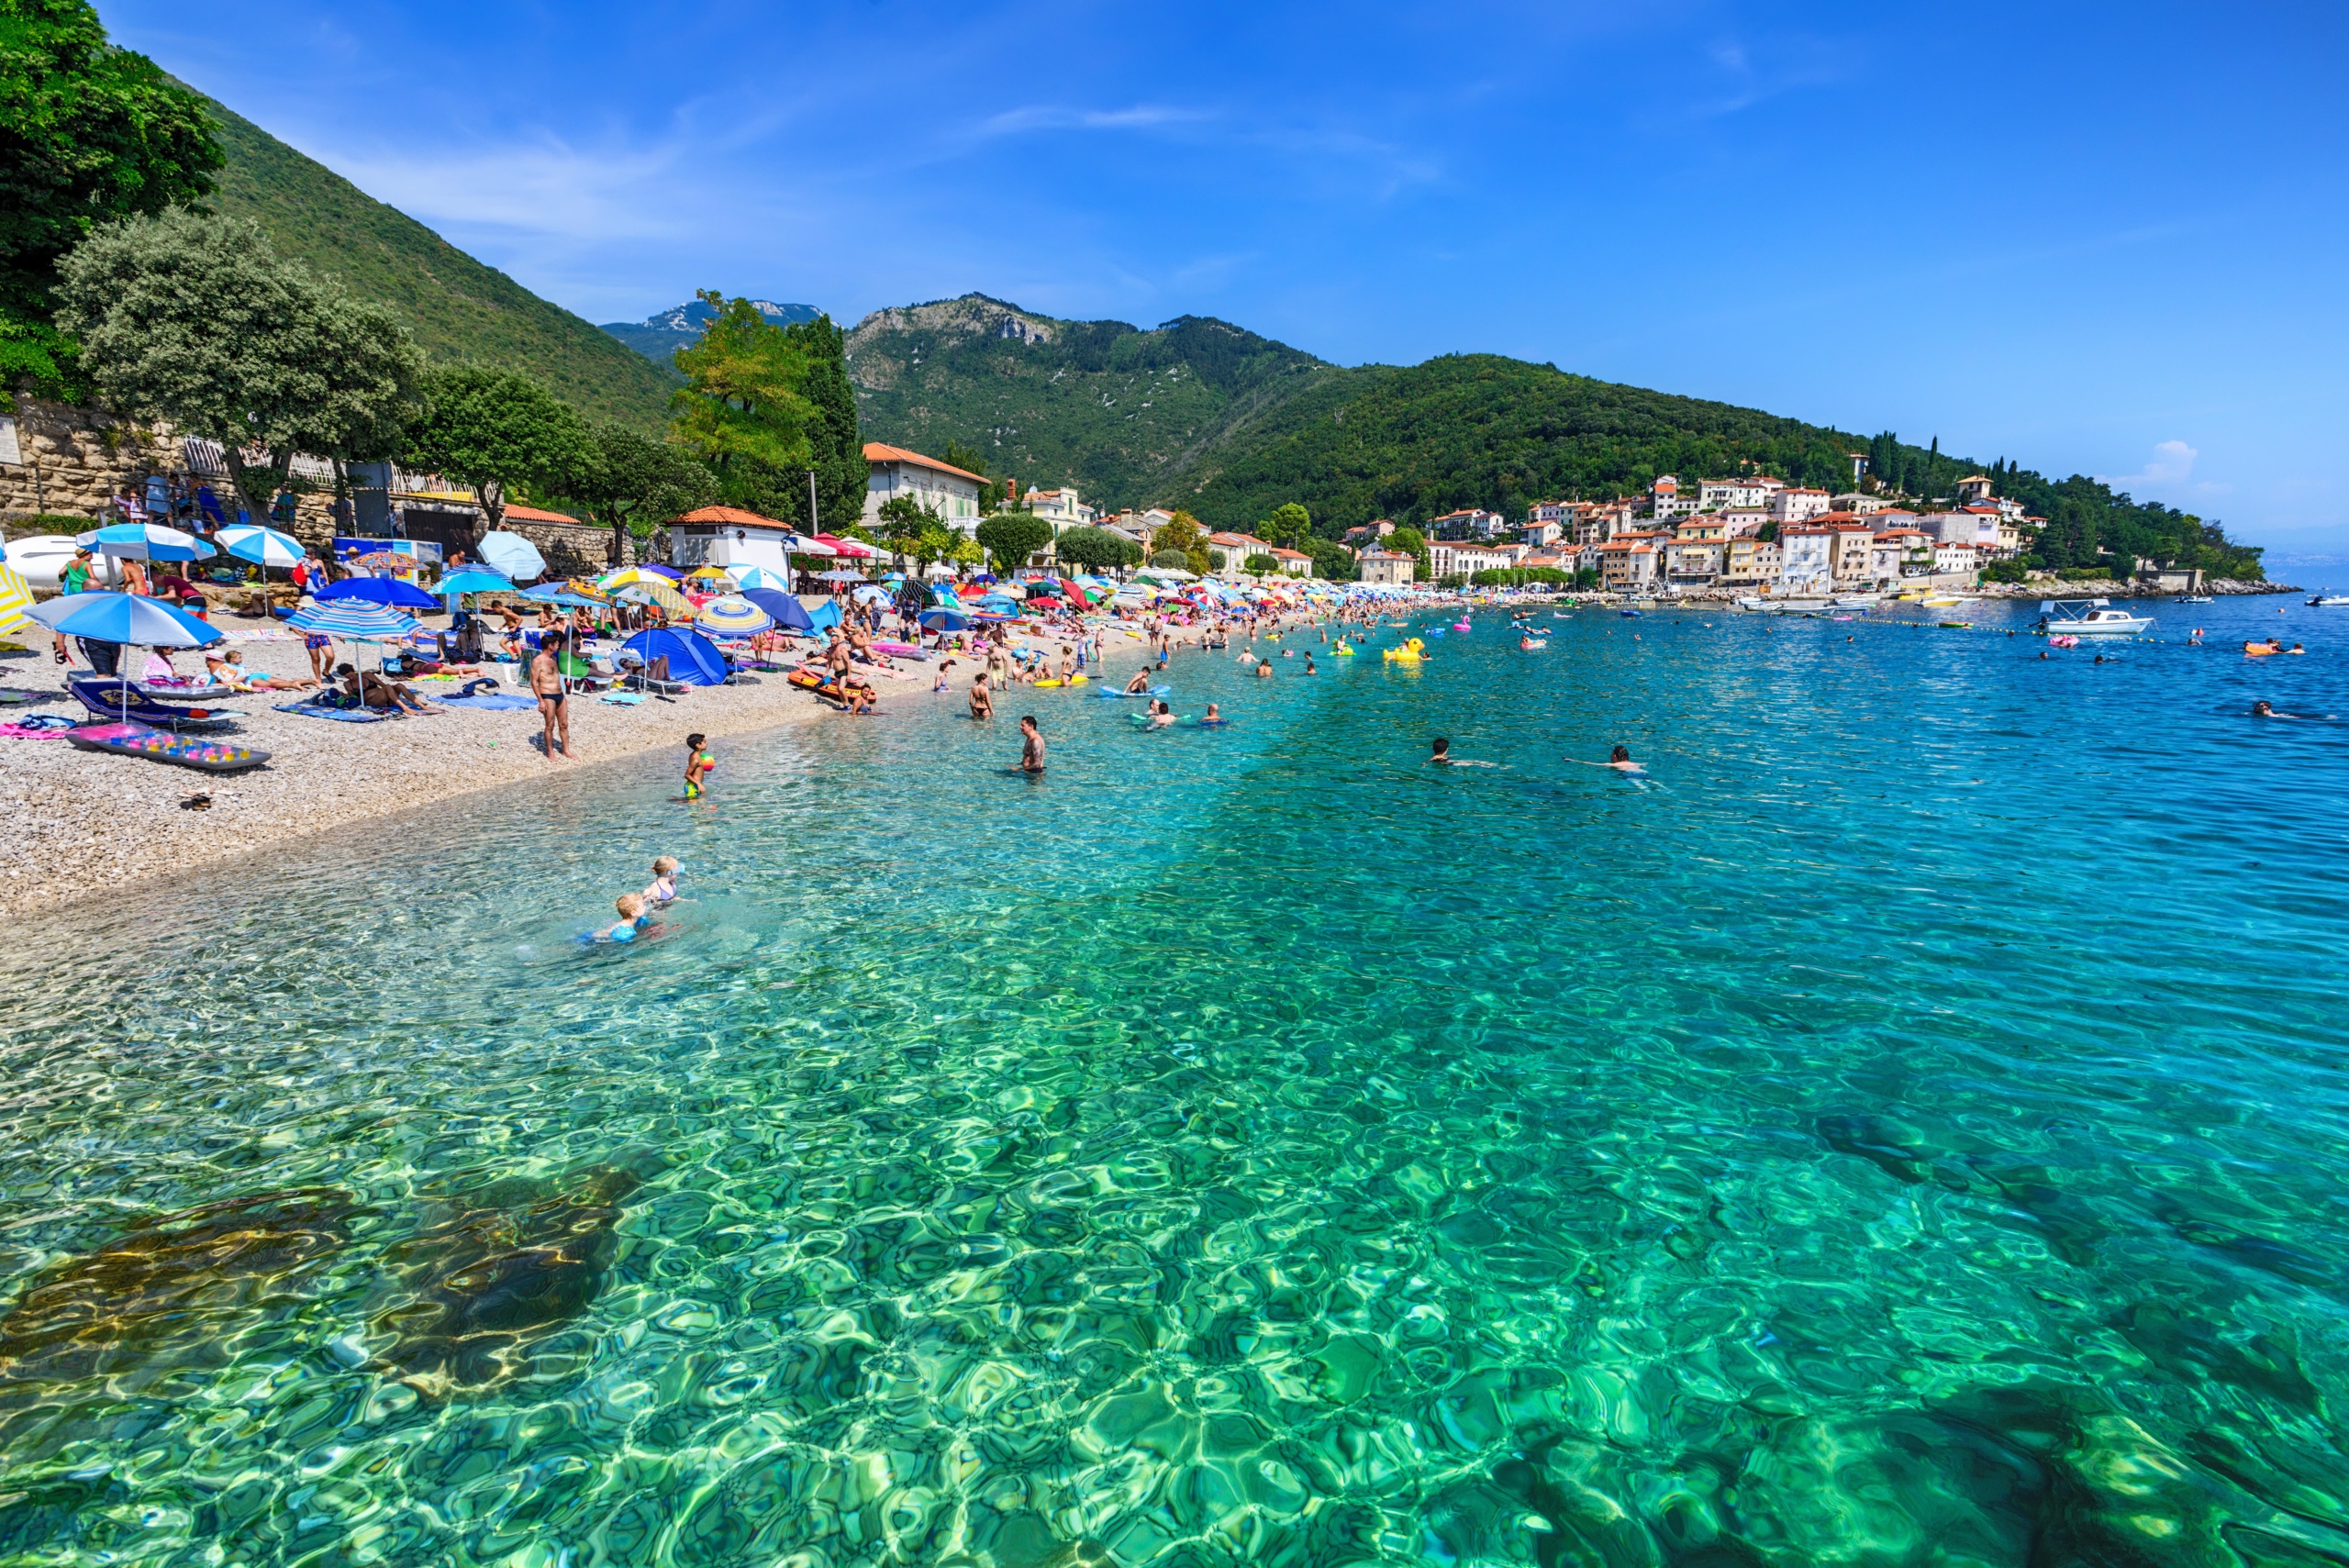 Hrvatska na vrhu – turistički brojevi također u kolovozu u porastu / Kroatien an der Spitze – Touristenzahlen auch im August im Aufwind